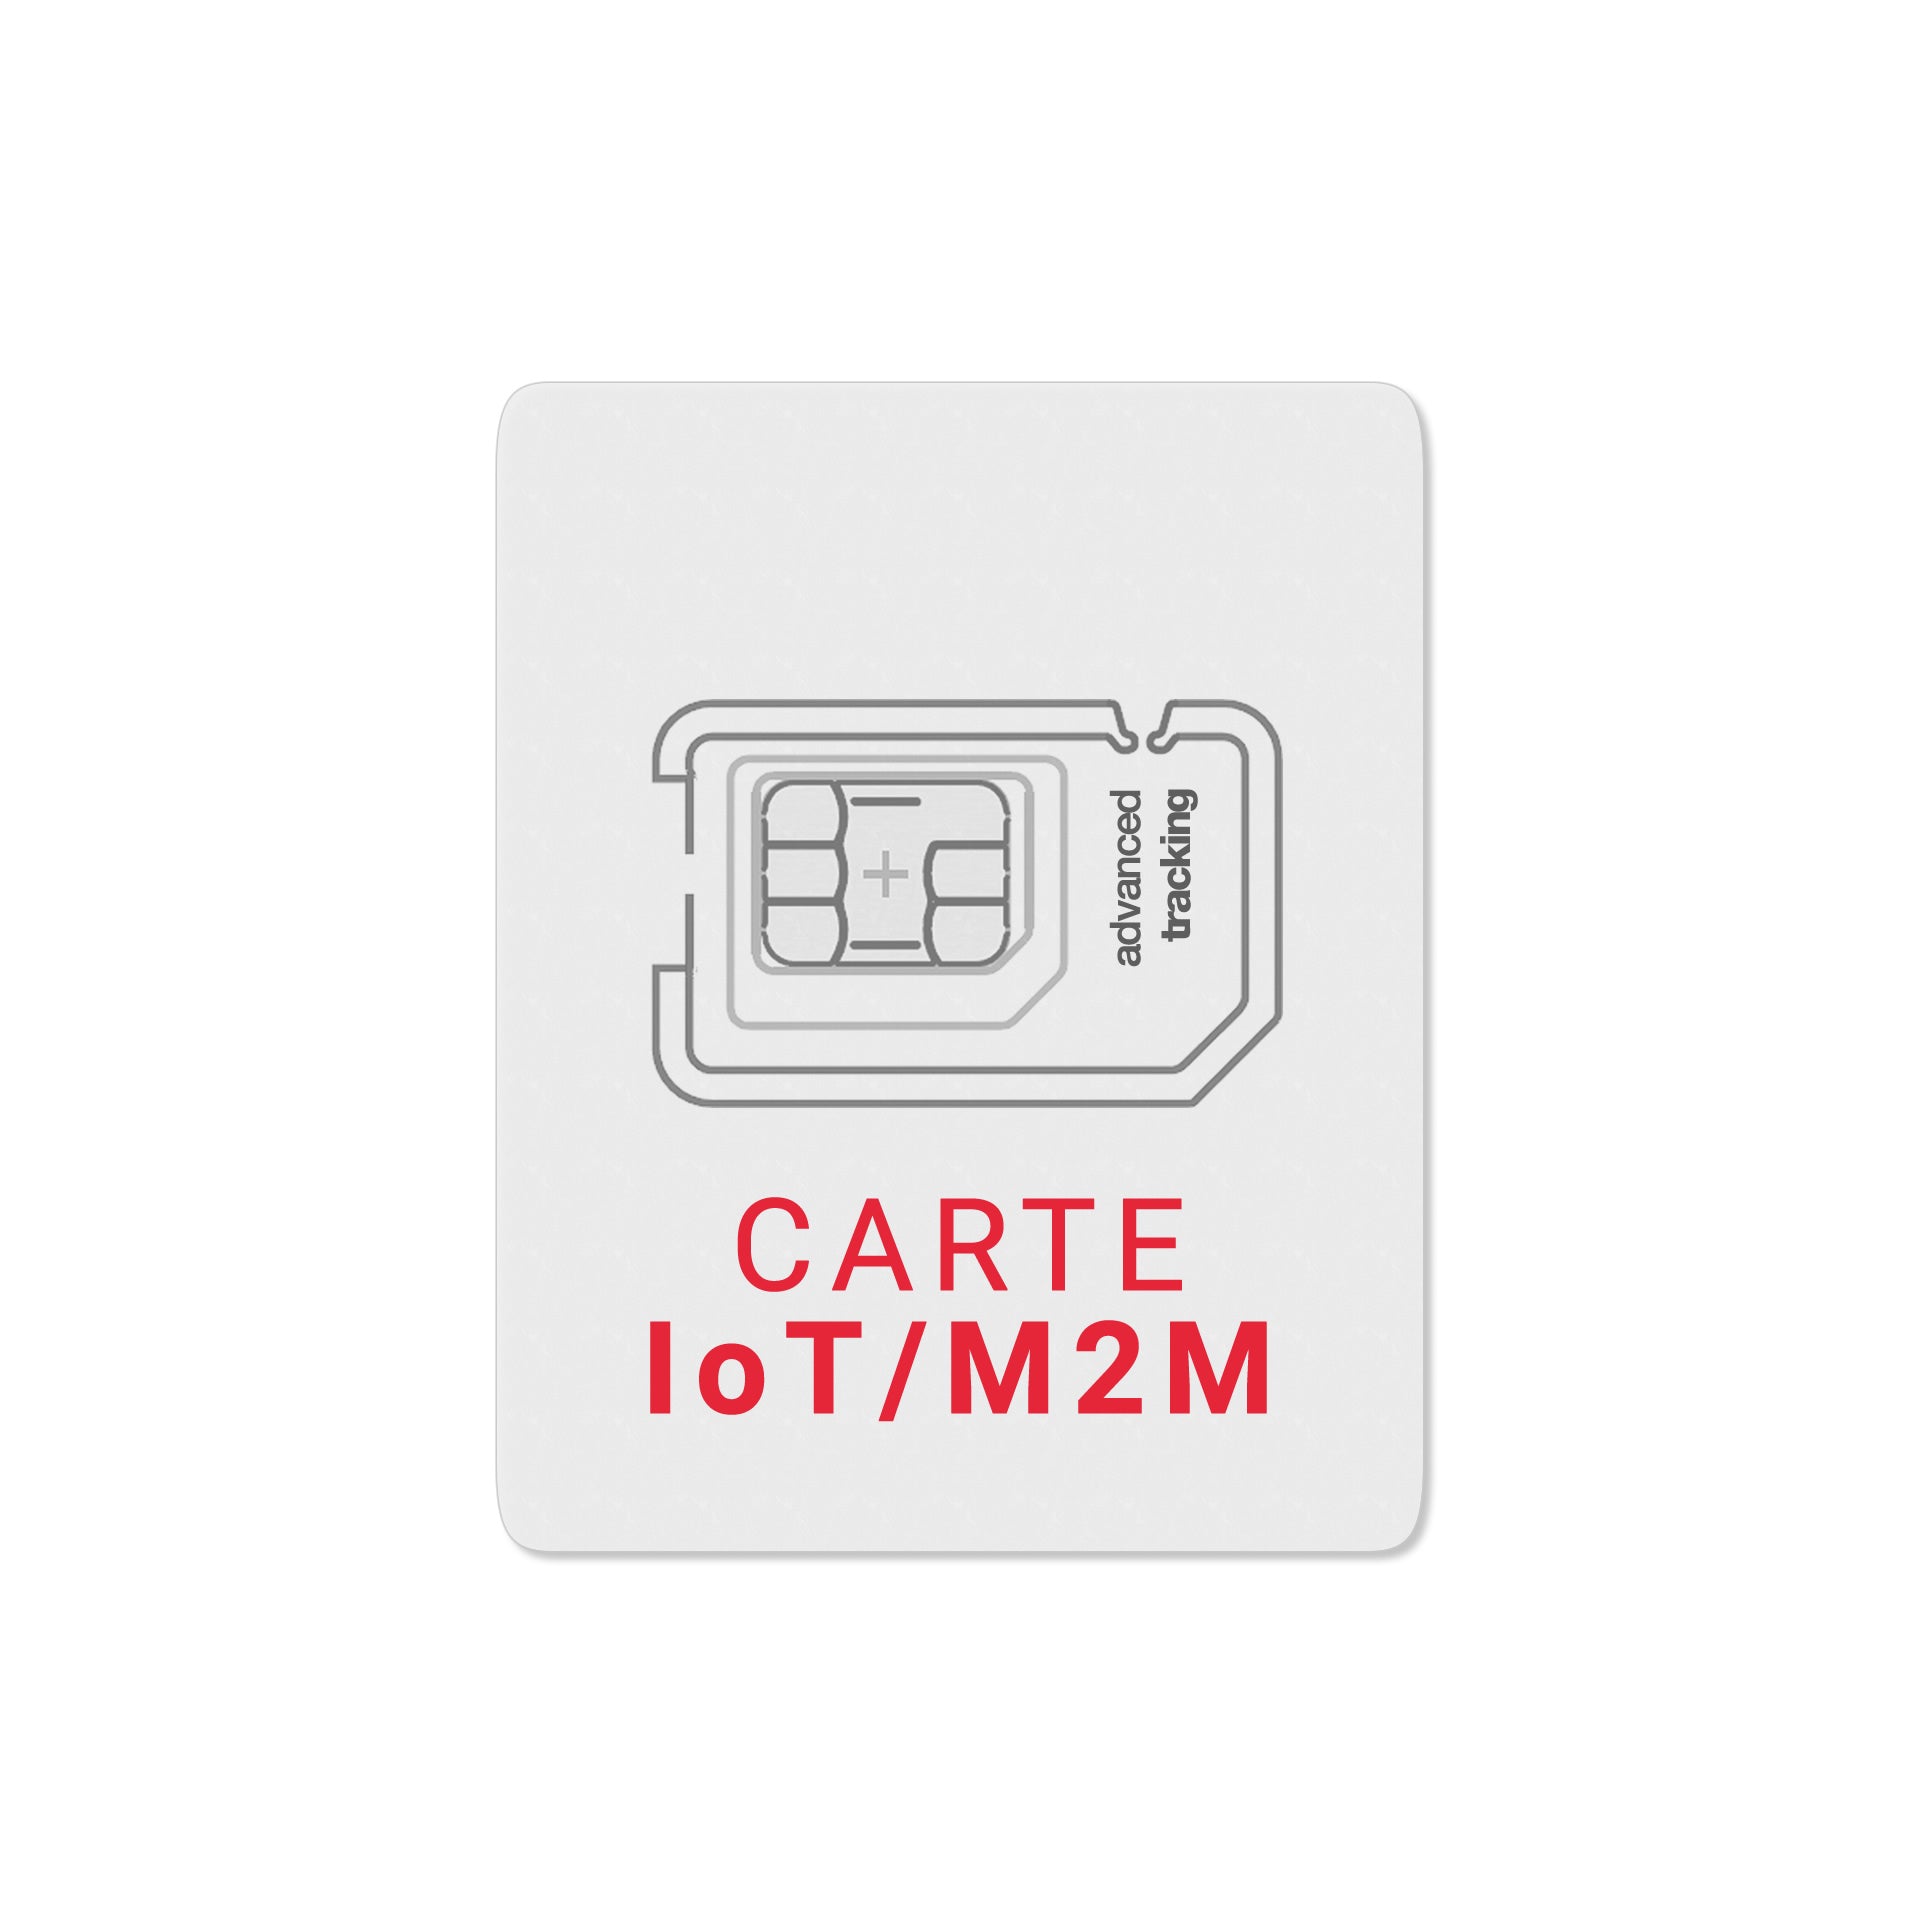 Prepaid SIM Card IoT/M2M World - 35 € HT - 250Mb data - Validity 36 MONTHS